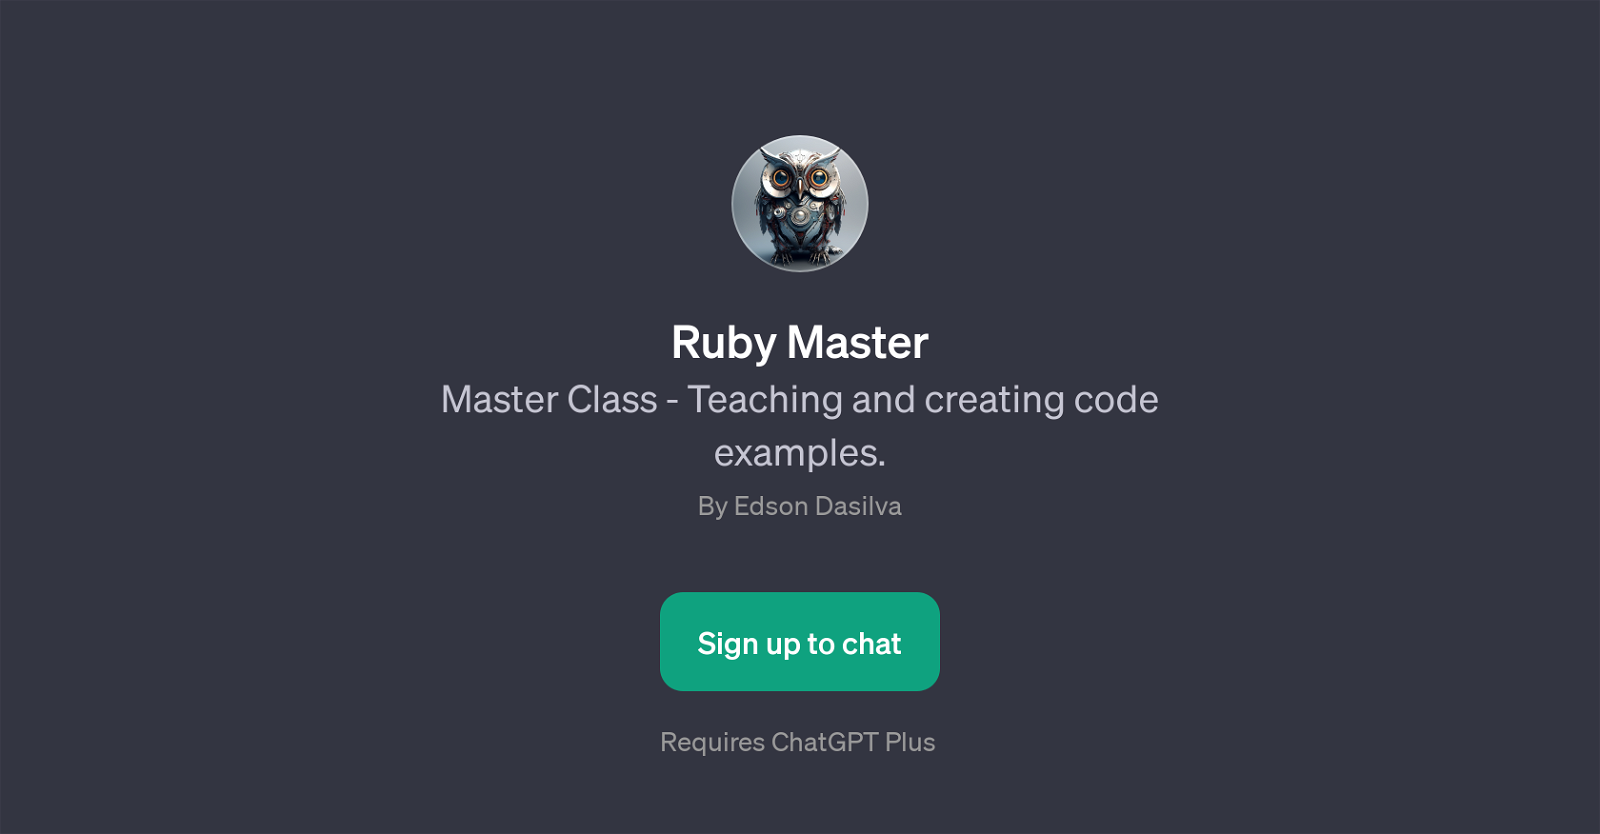 Ruby Master website